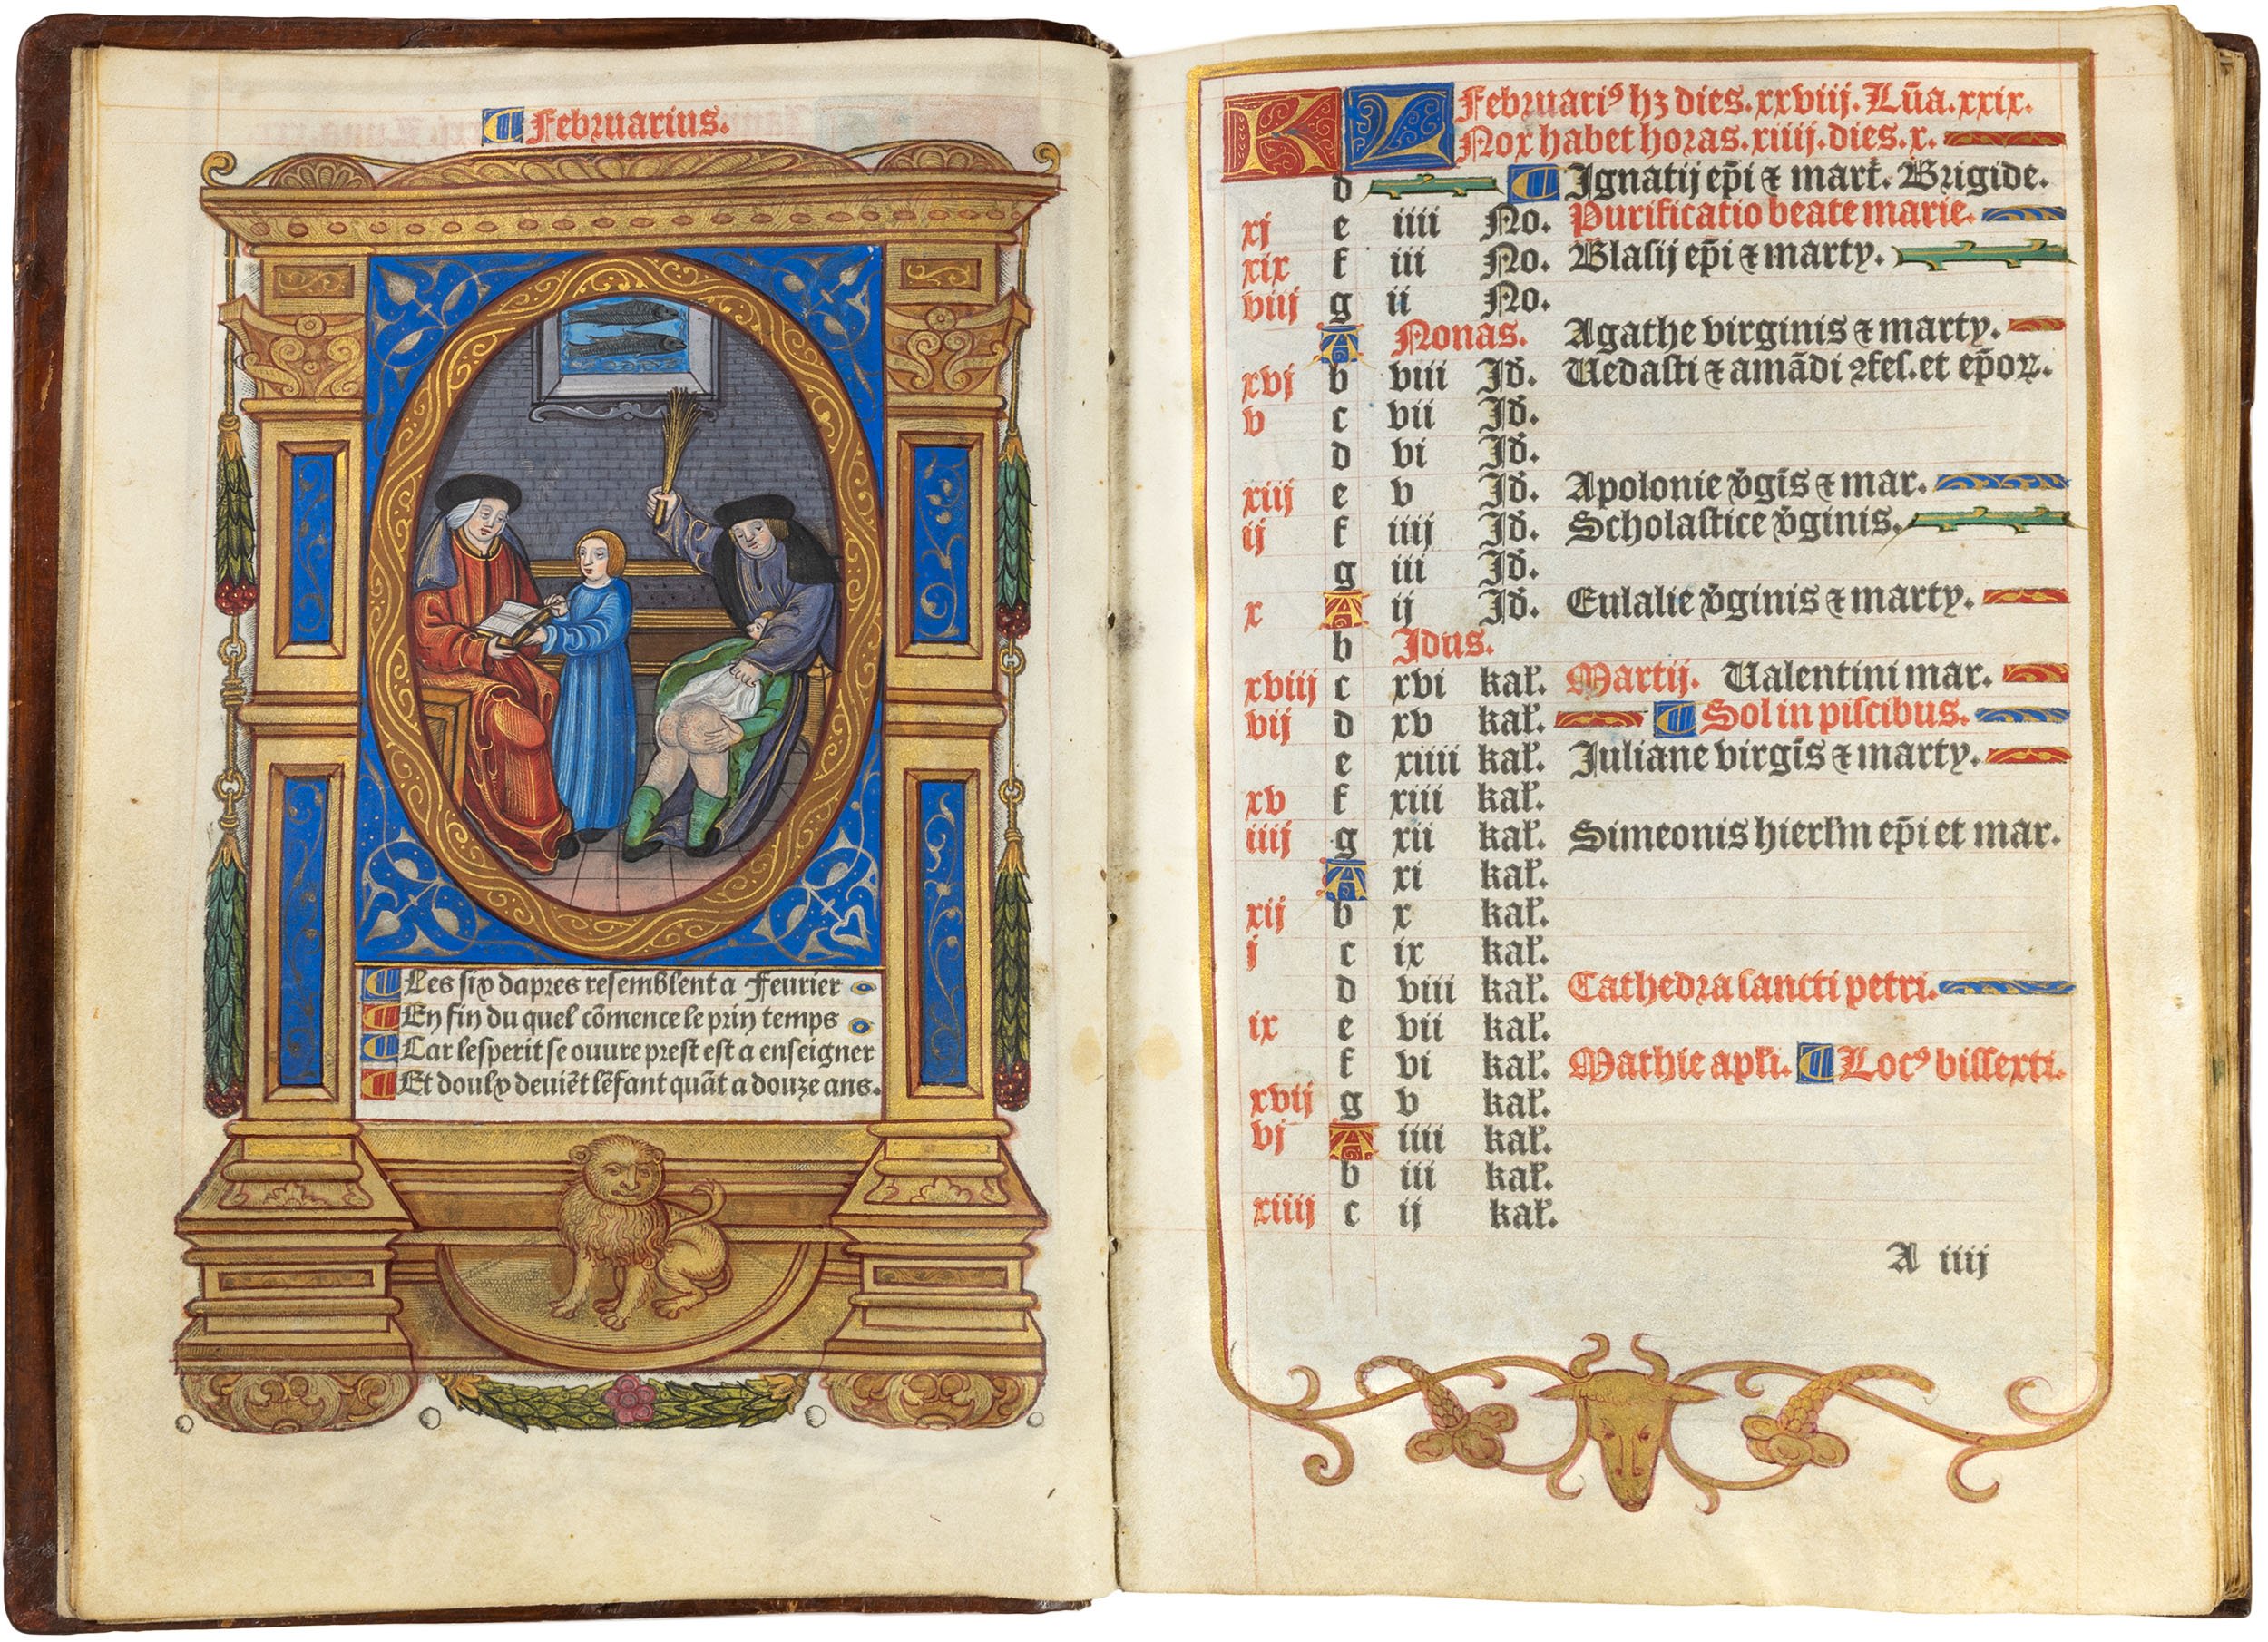 Printed-Book-of-hours-Anne-de-Montmorency-16-february-1523-kerver-yolande-bonhomme-illuminated-vellum-copy-06.jpg